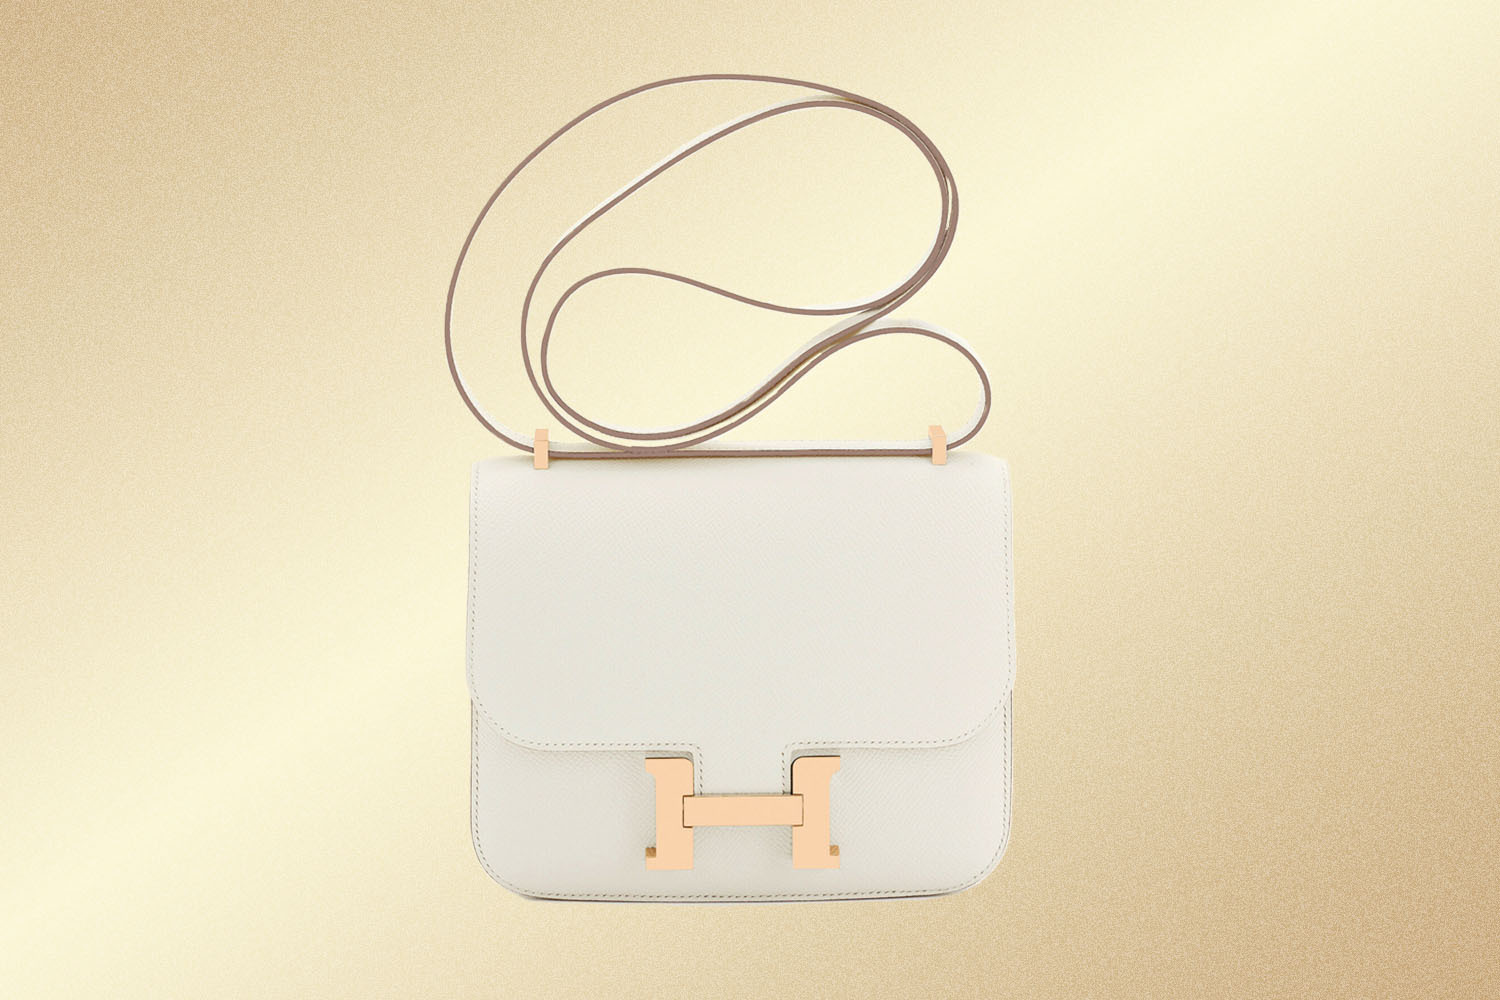 Women's Hermès Mini Constance Rose Gold Handbag available on eBay